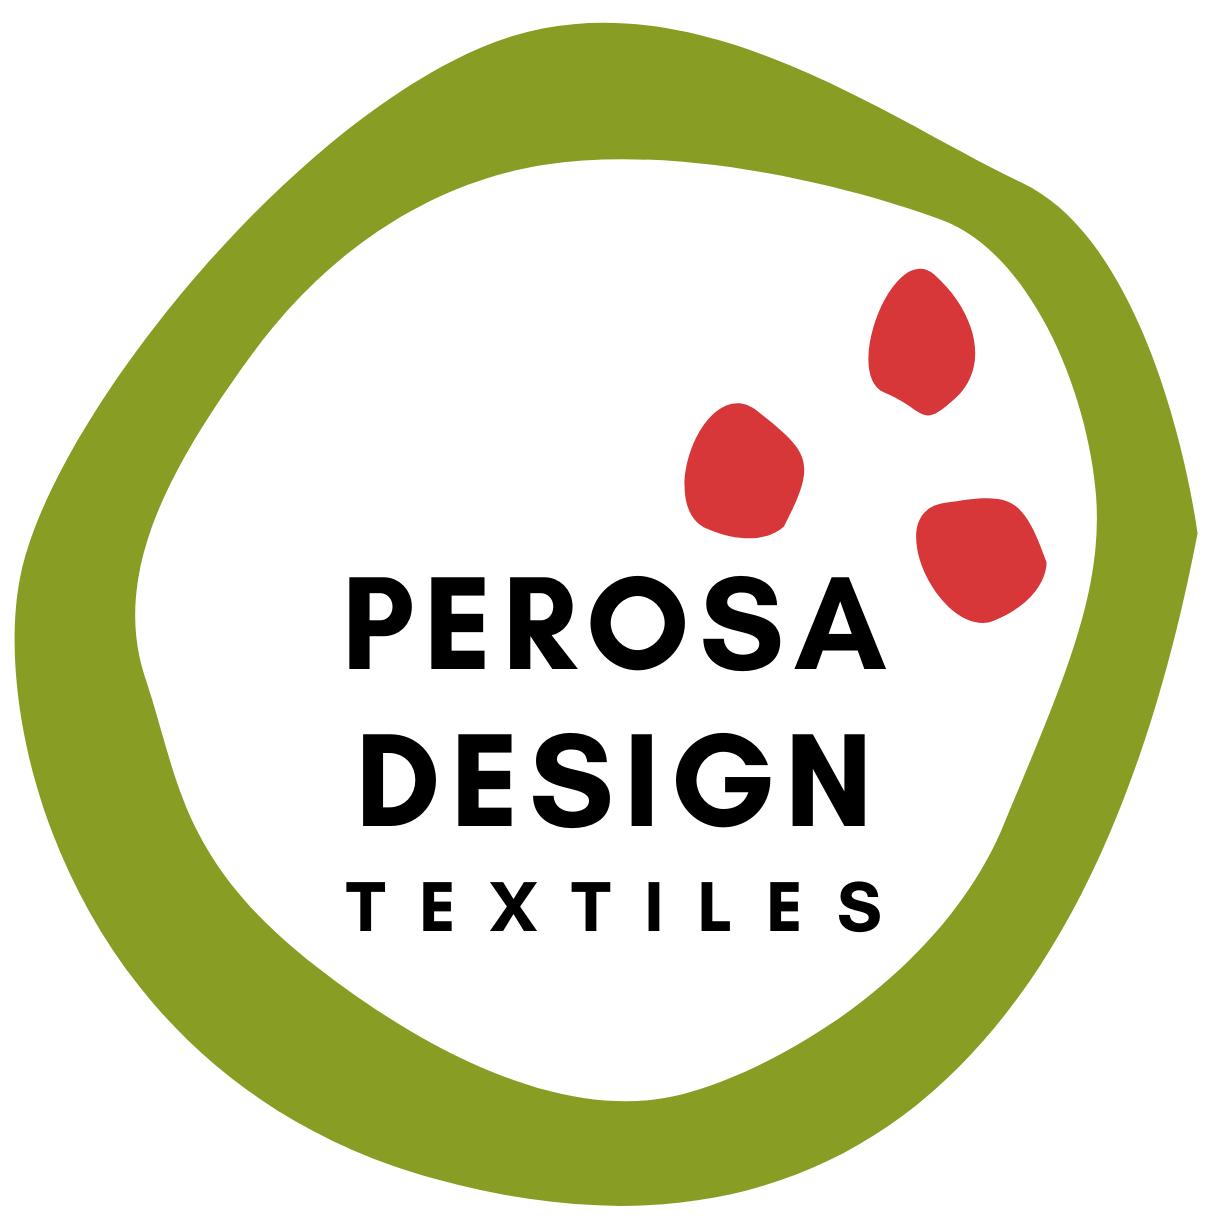 Perosa Design